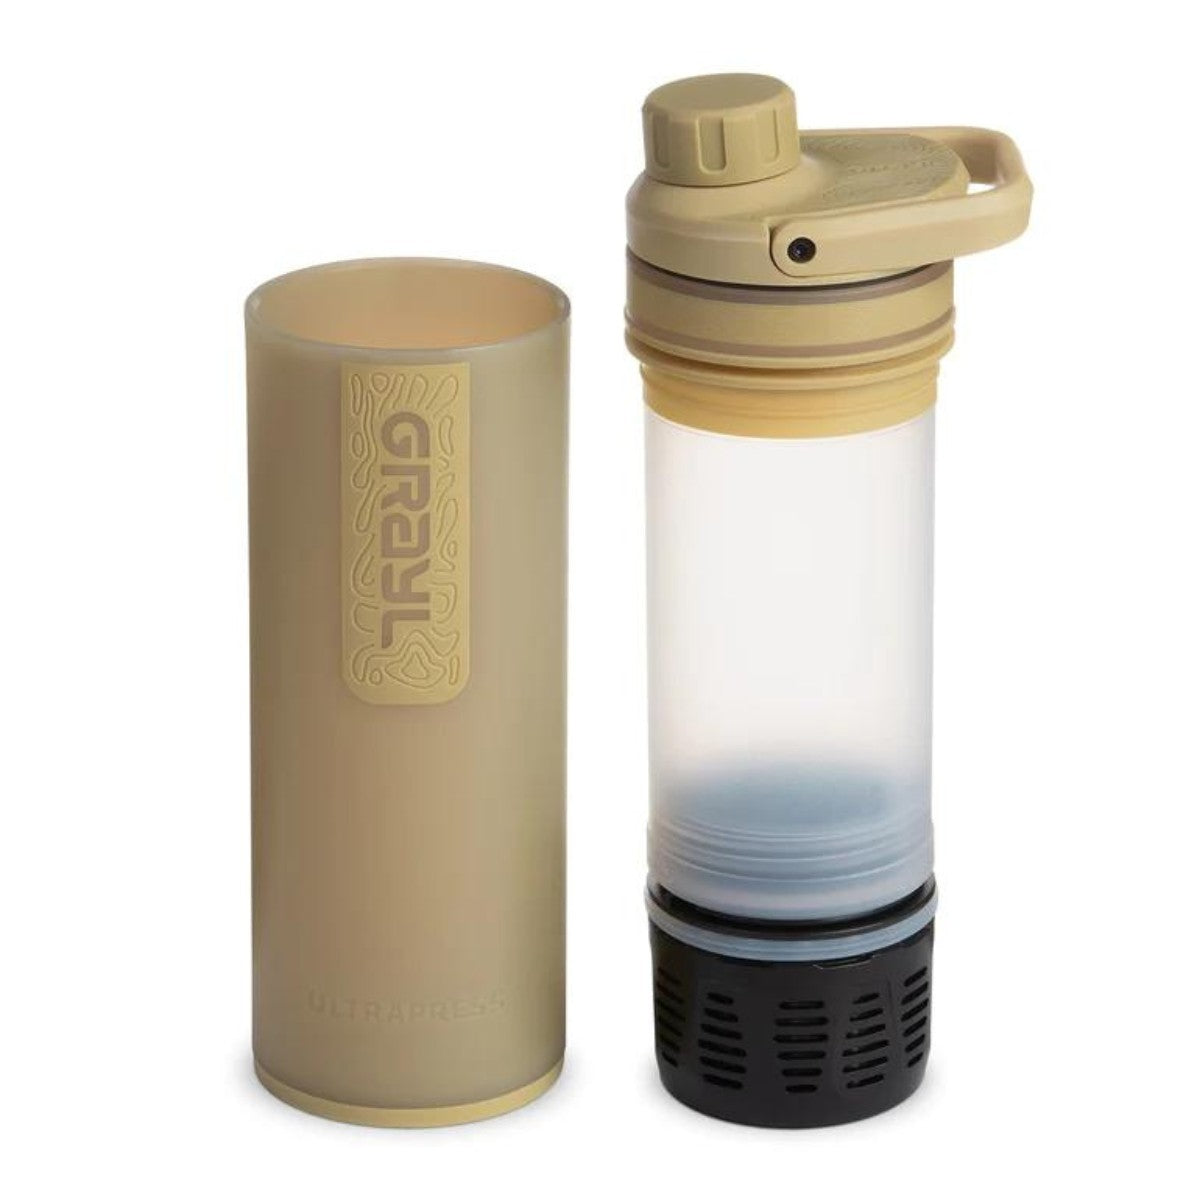 16 OZ Grayl GeoPress Ultrapress Water Purifier - Desert Tan